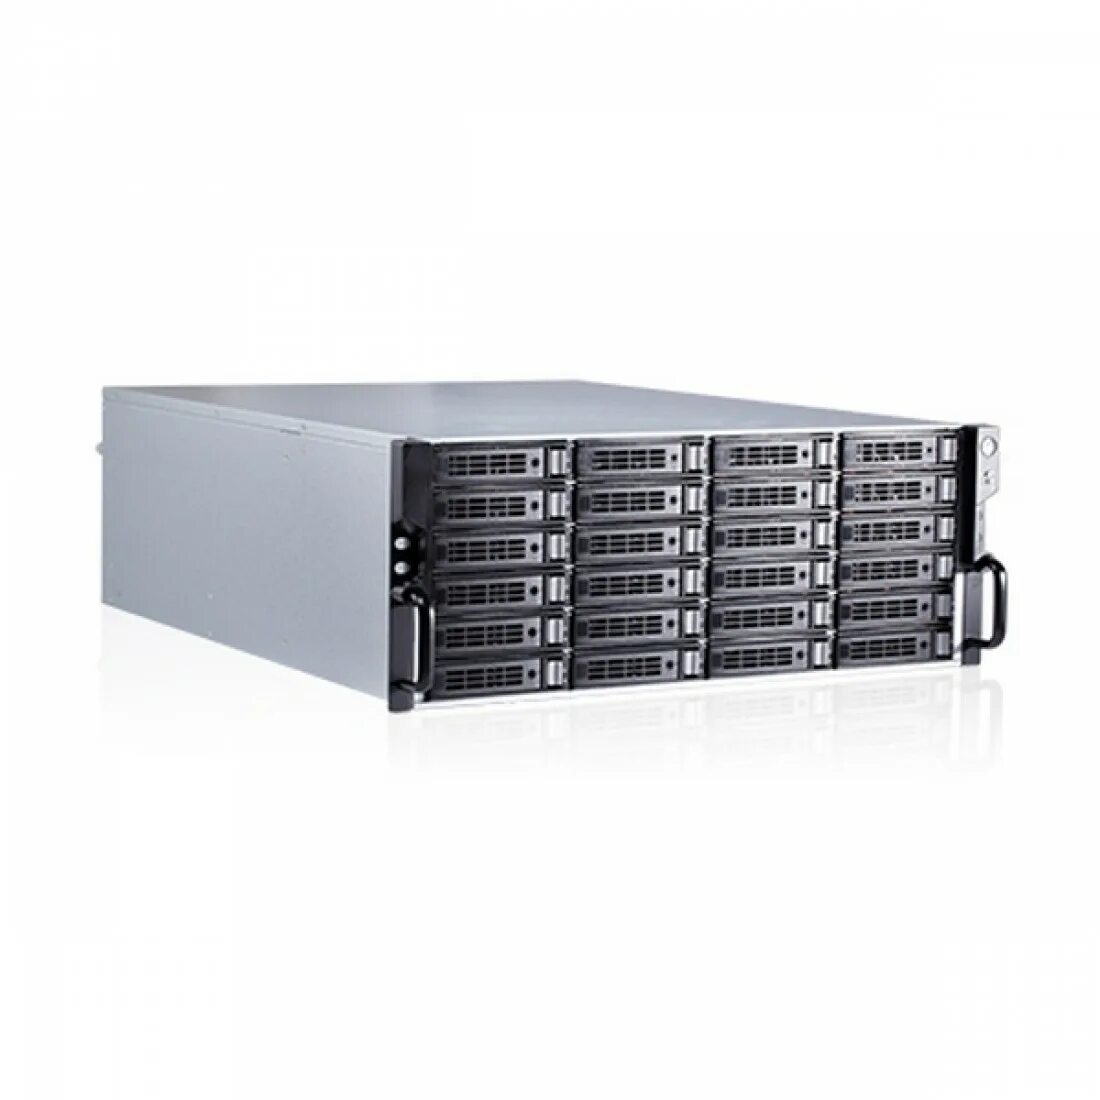 Bh 64 ch 16. HIKCENTRAL-P-VSS-Base/hw/300ch. HIKCENTRAL-VSS. Видеосервер 4k 16 Ch 2hdd. Сервер HIKCENTRAL-P-VSS-Base/hw/64ch / Server.